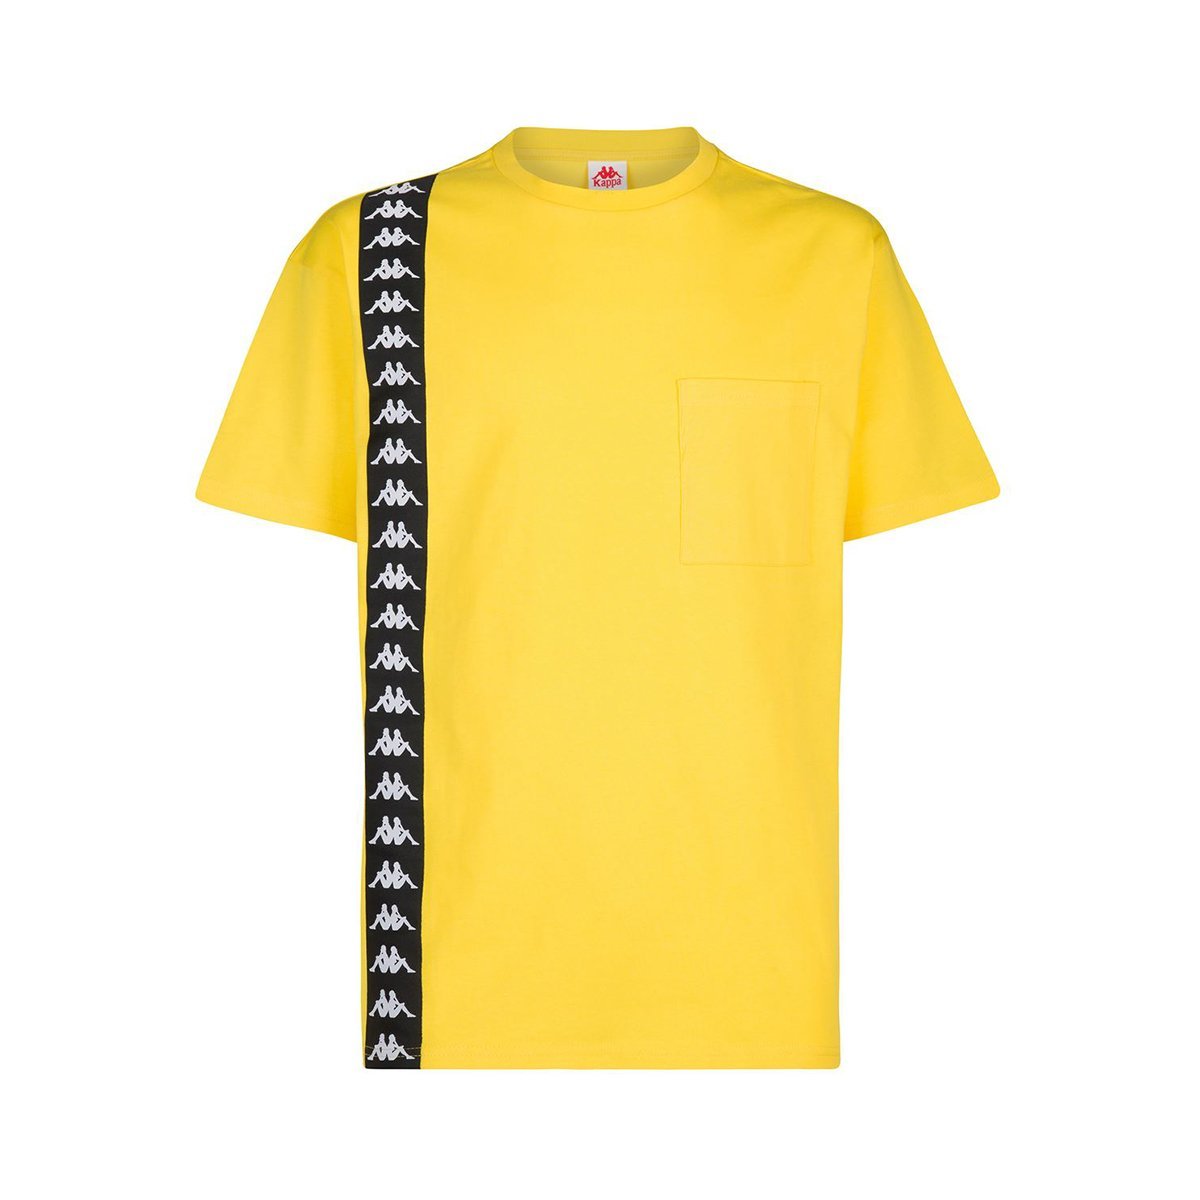 Camiseta Ecop hombre amarillo - Imagen 4